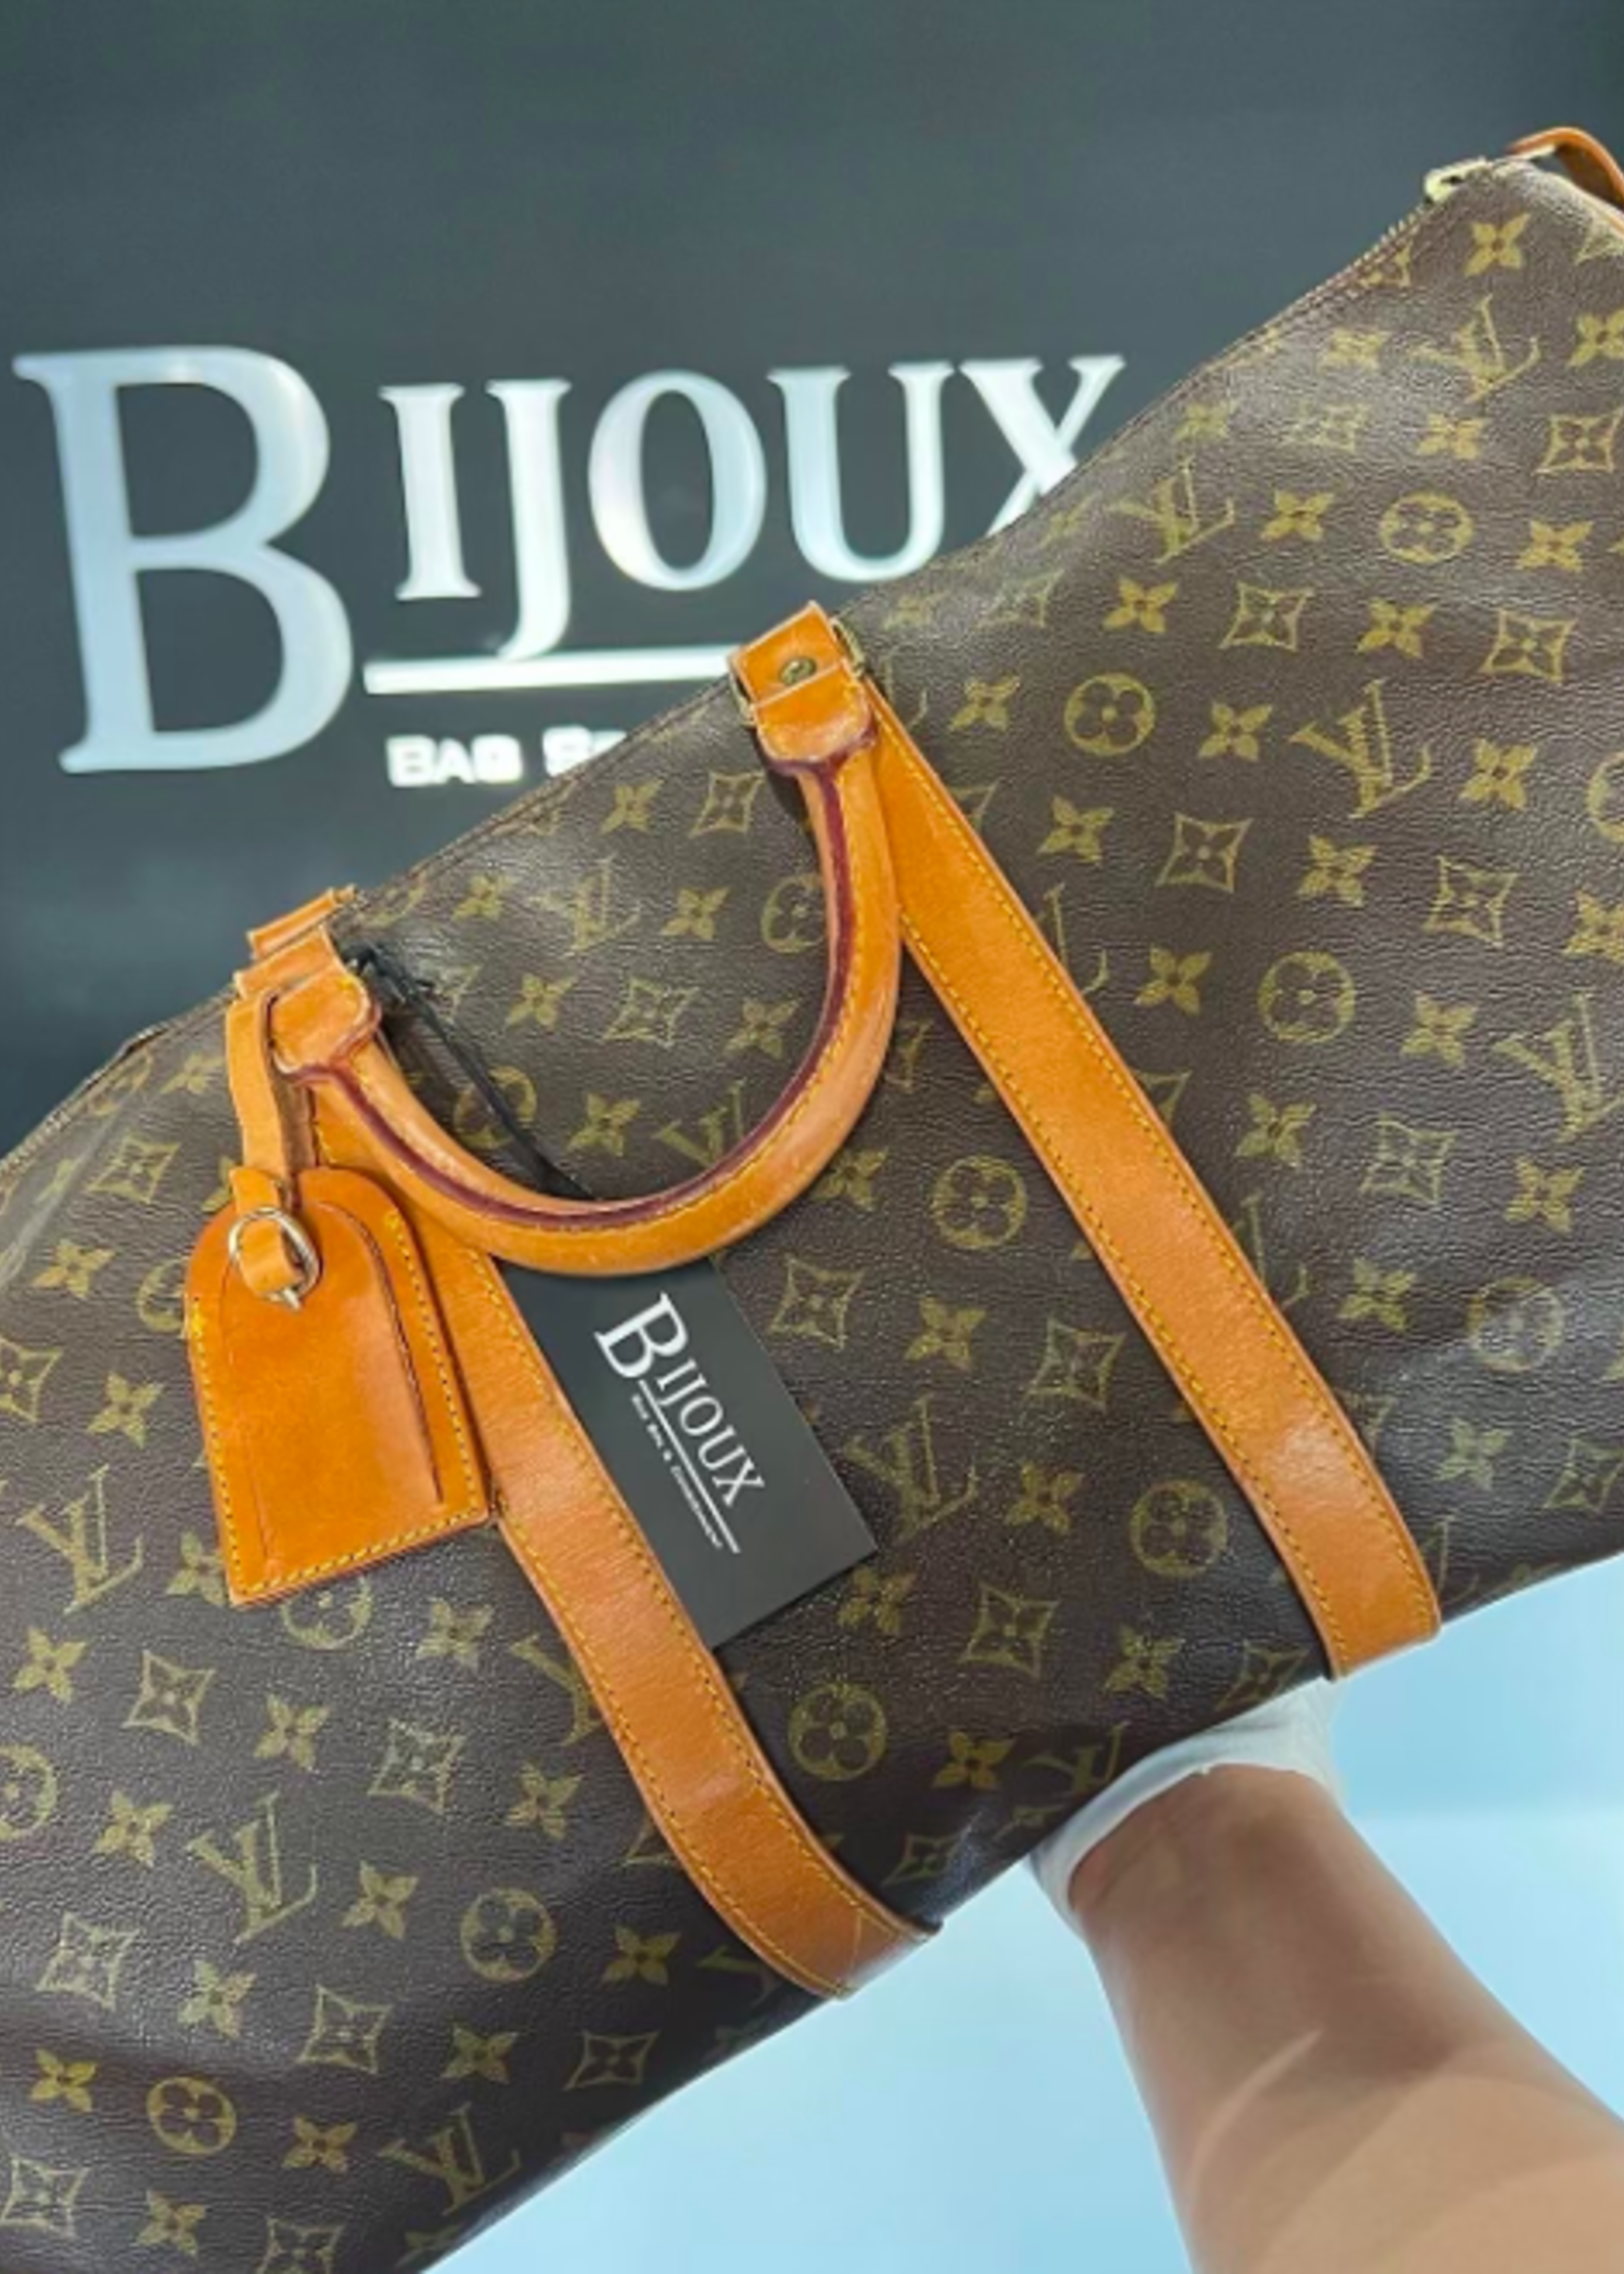 Louis Vuitton Vintage Keepall 55 - Bijoux Bag Spa & Consignment